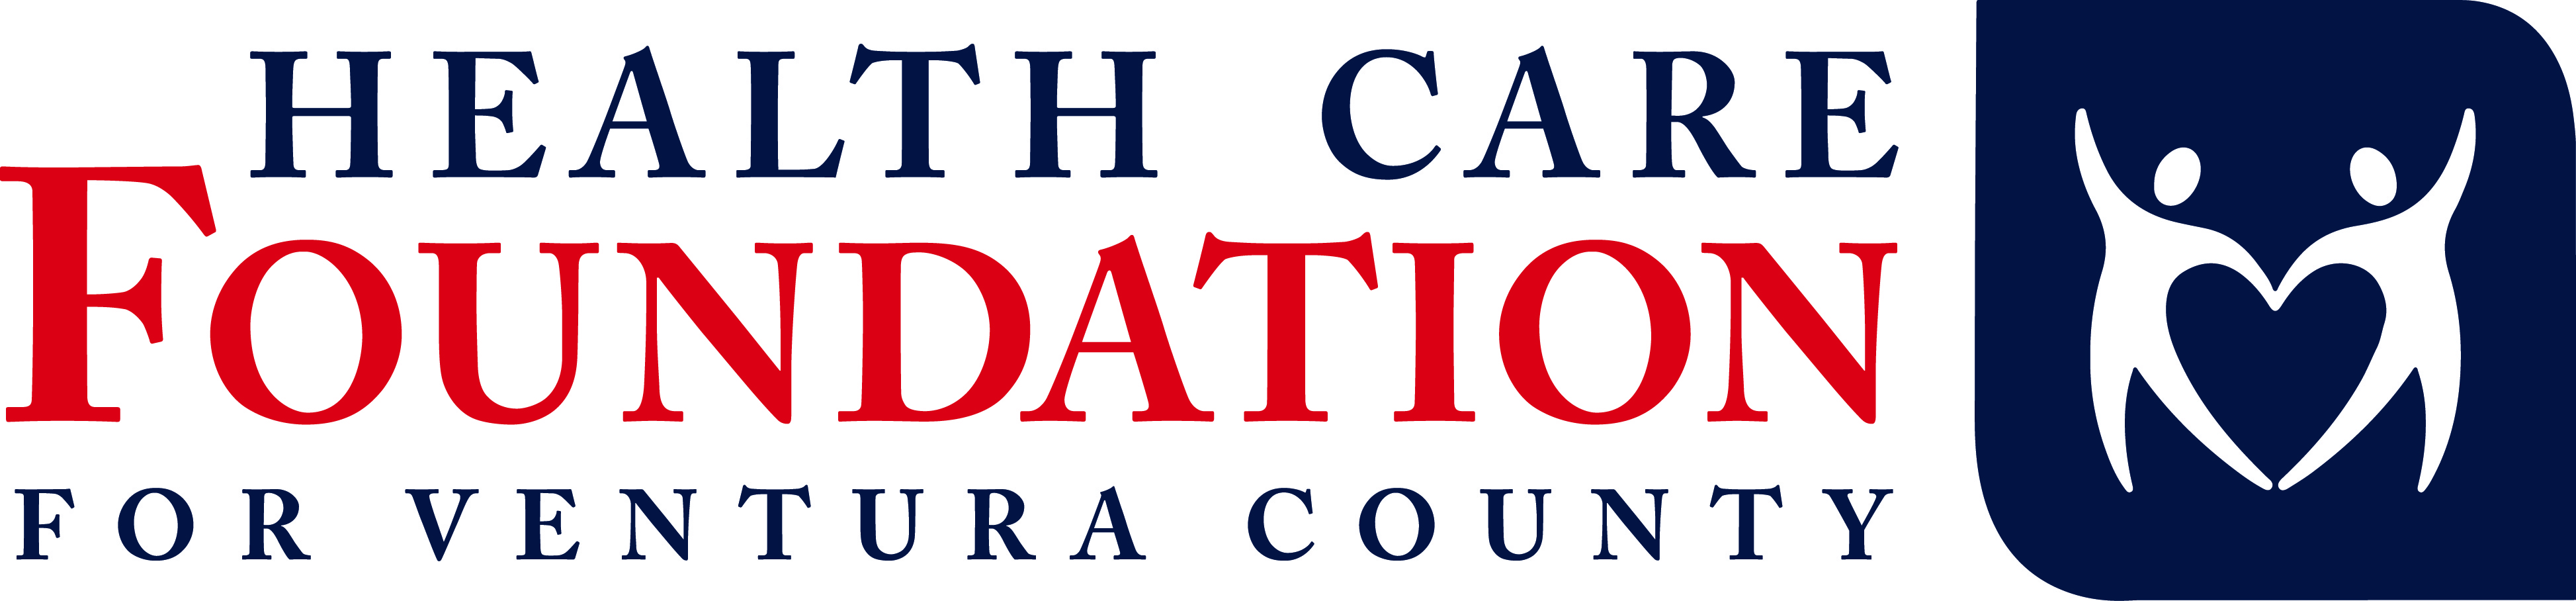 Health Care Foundation for Ventura County